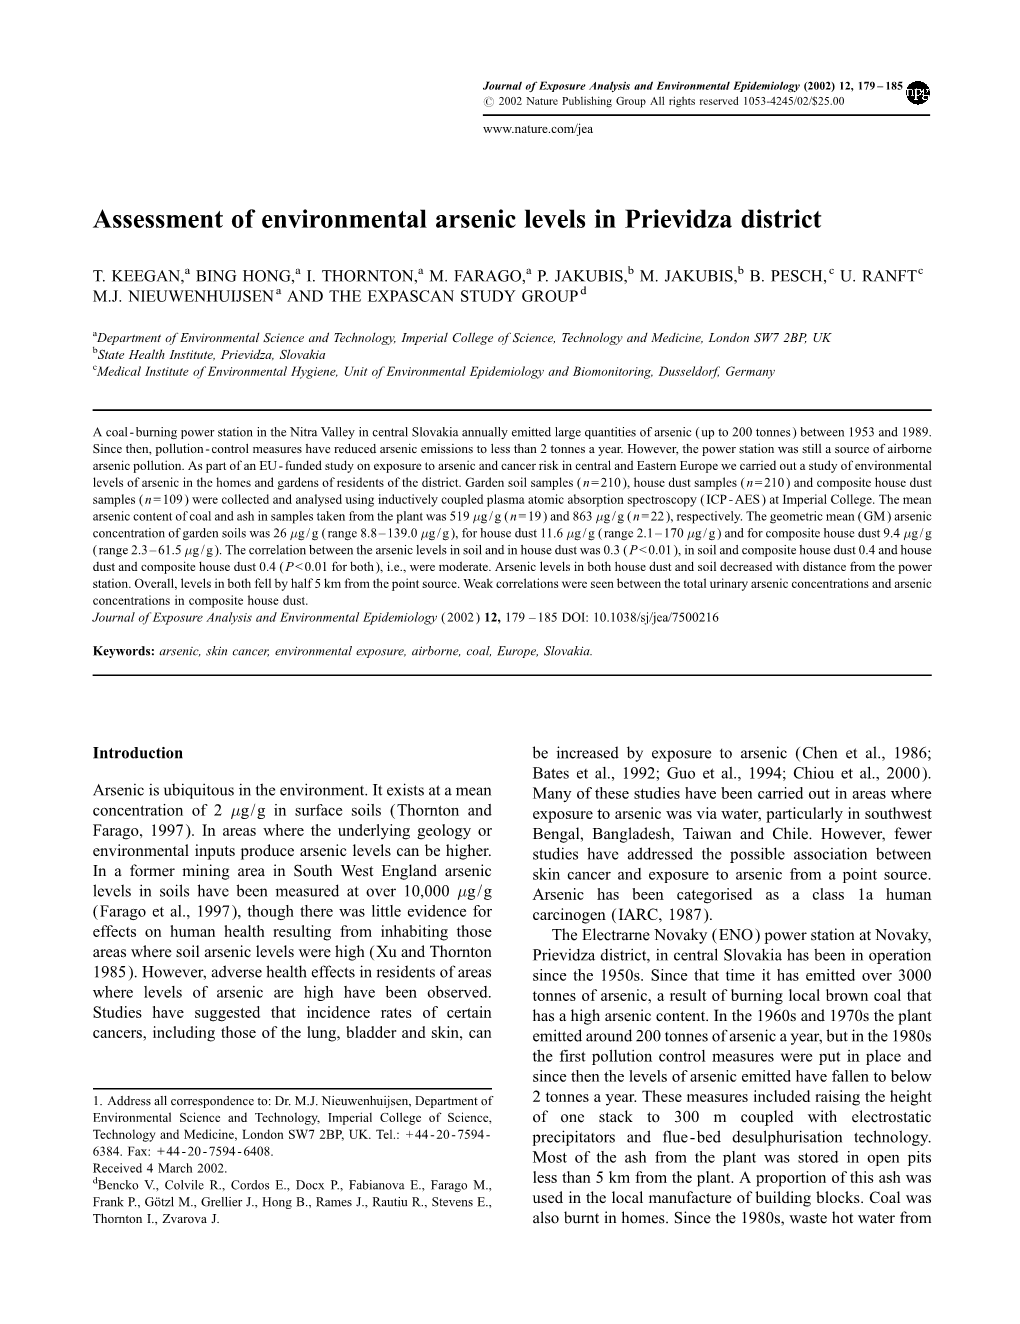 Assessment of Environmental Arsenic Levels in Prievidza District